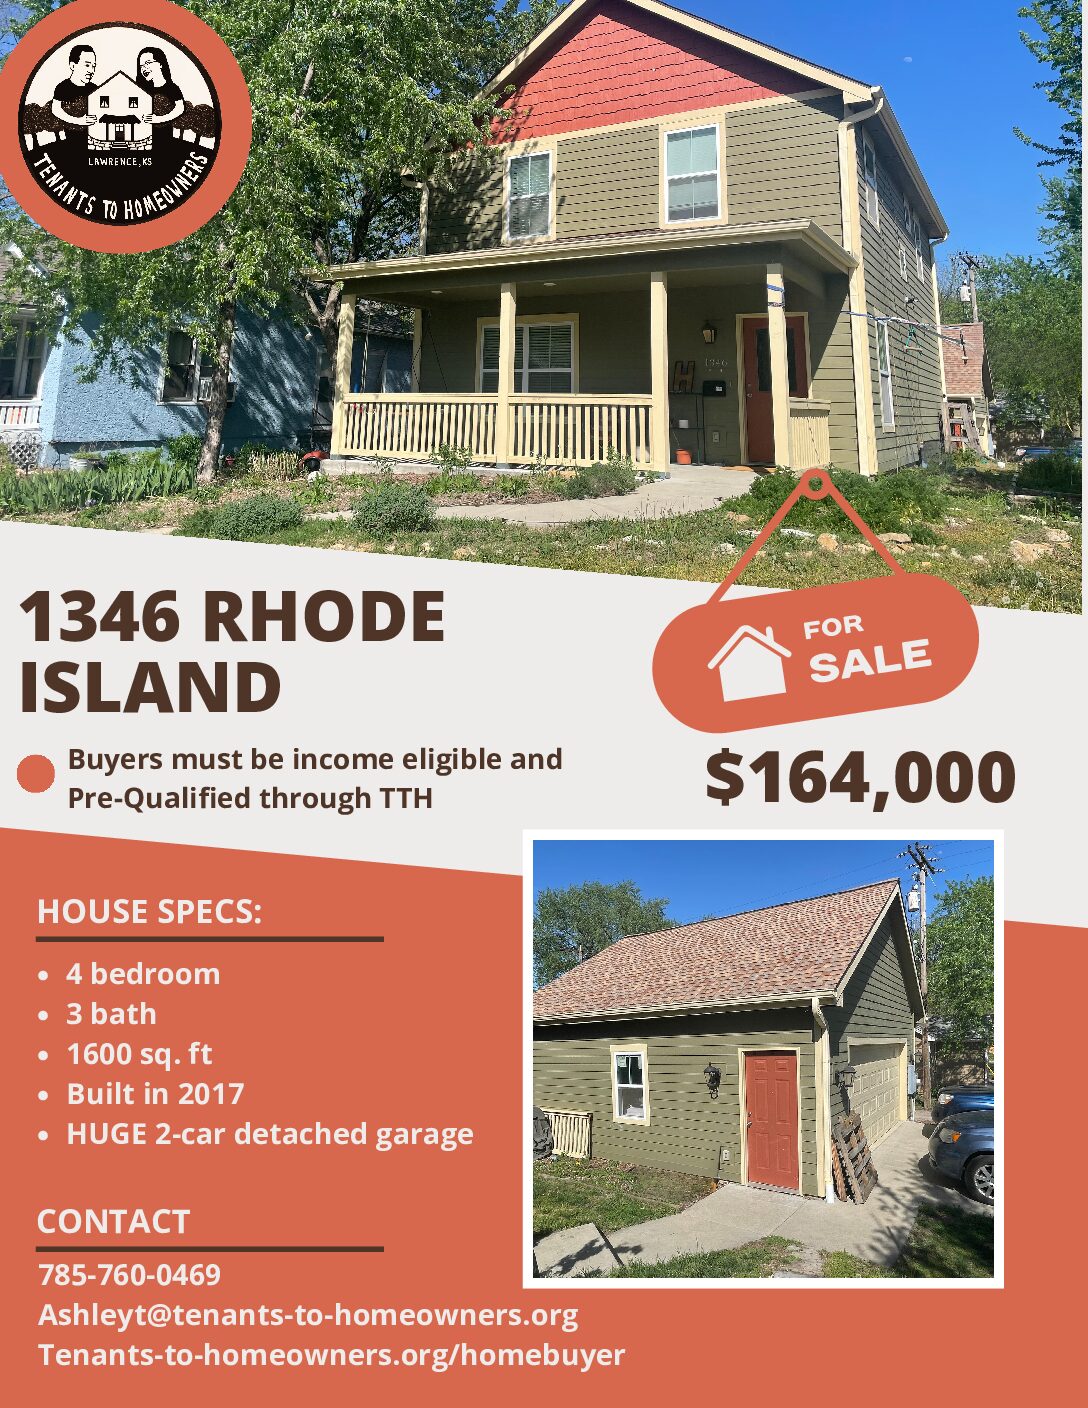 1346 Rhode Island – For Sale